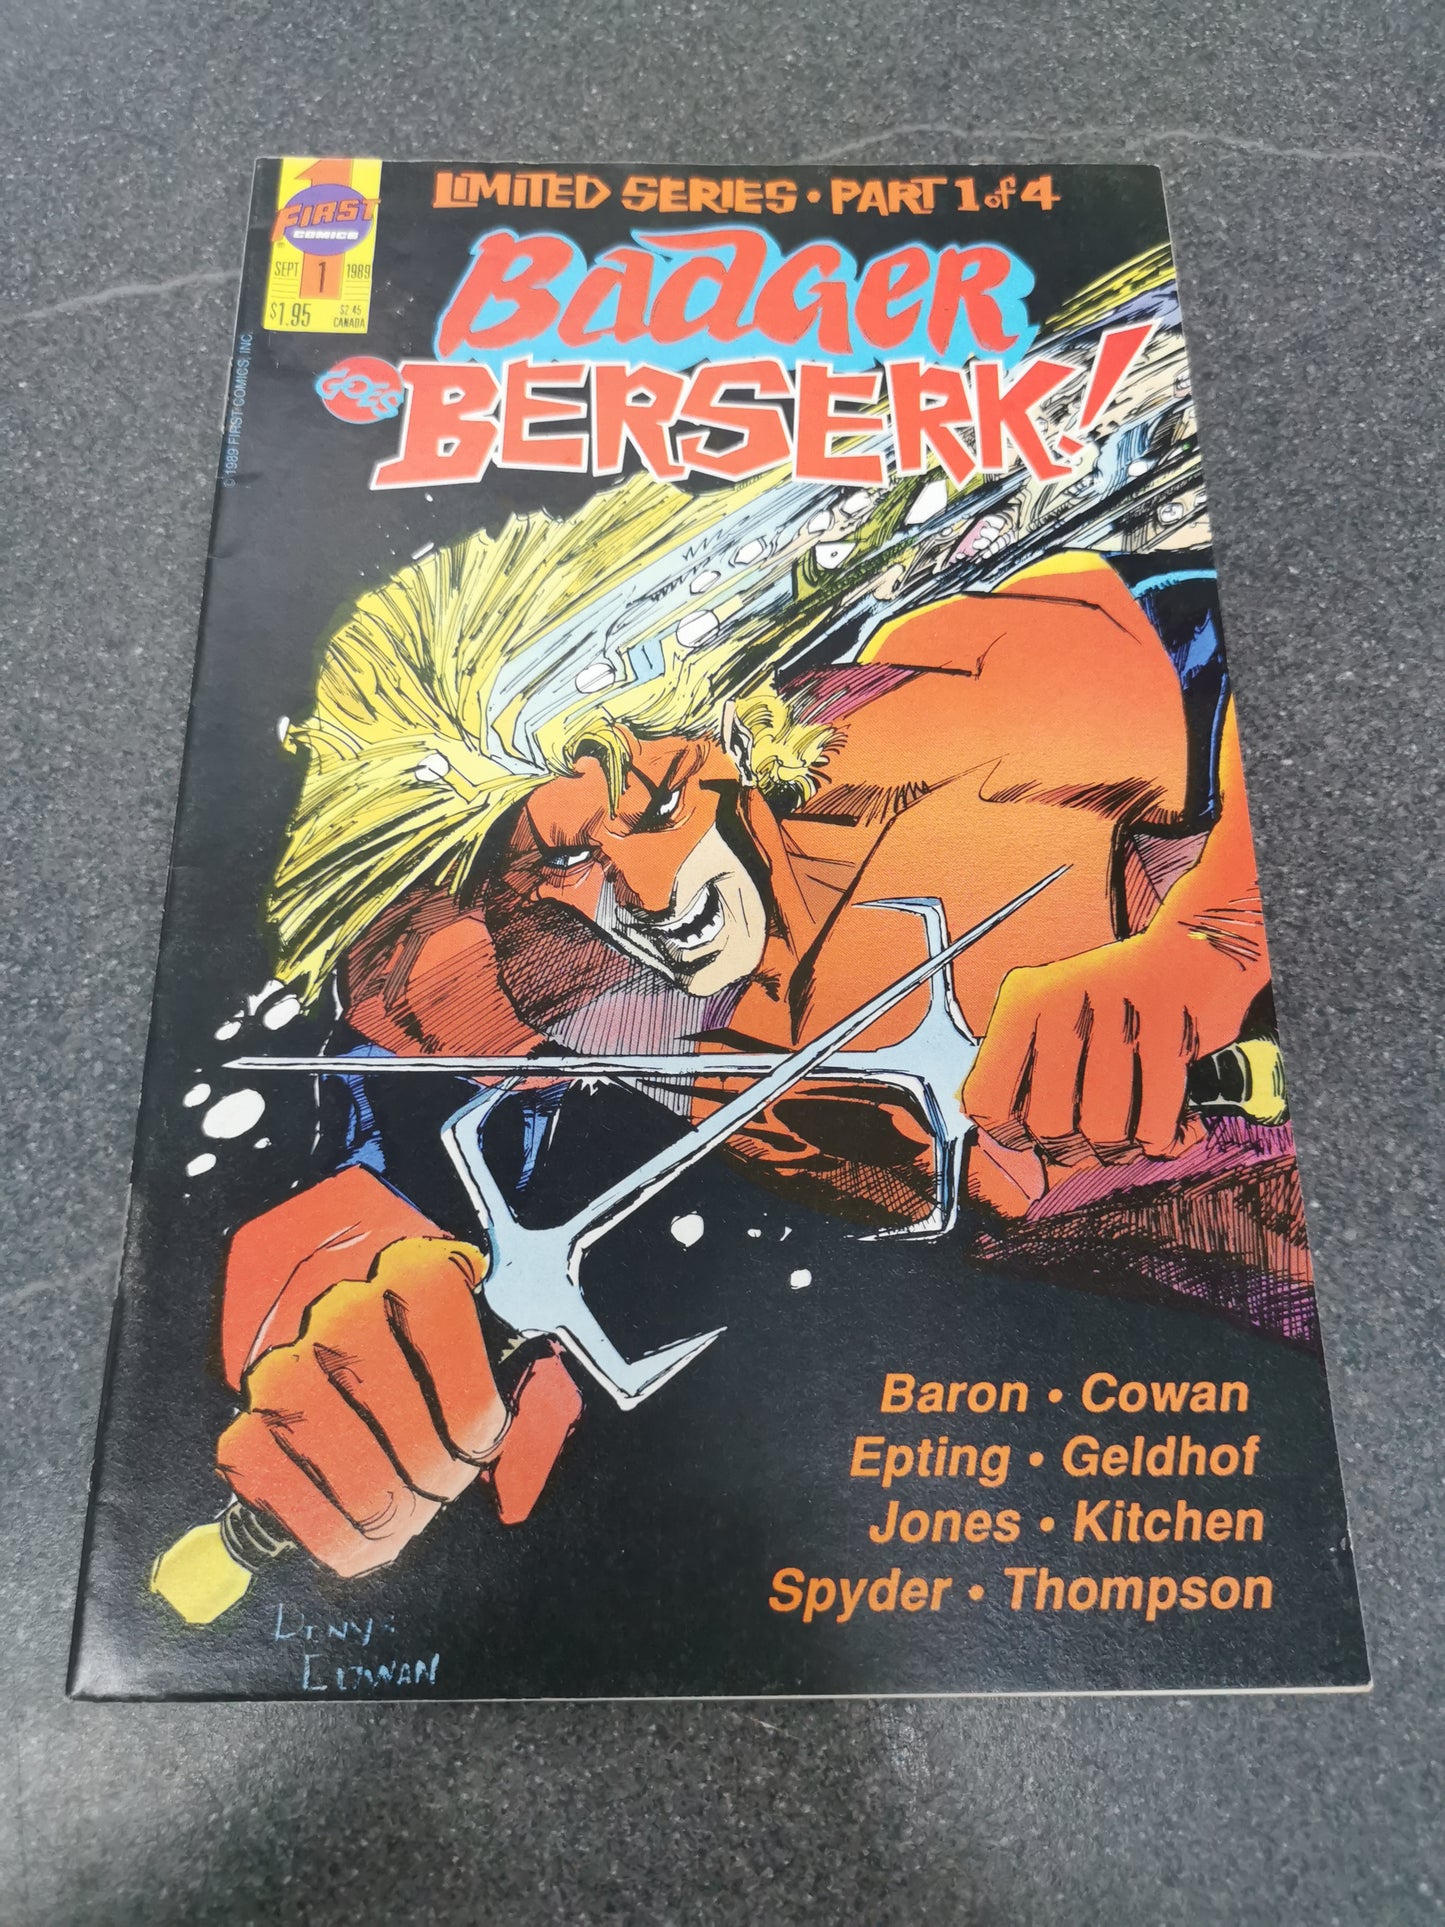 Badger Goes Berserk #1 1989 First Publishing comic